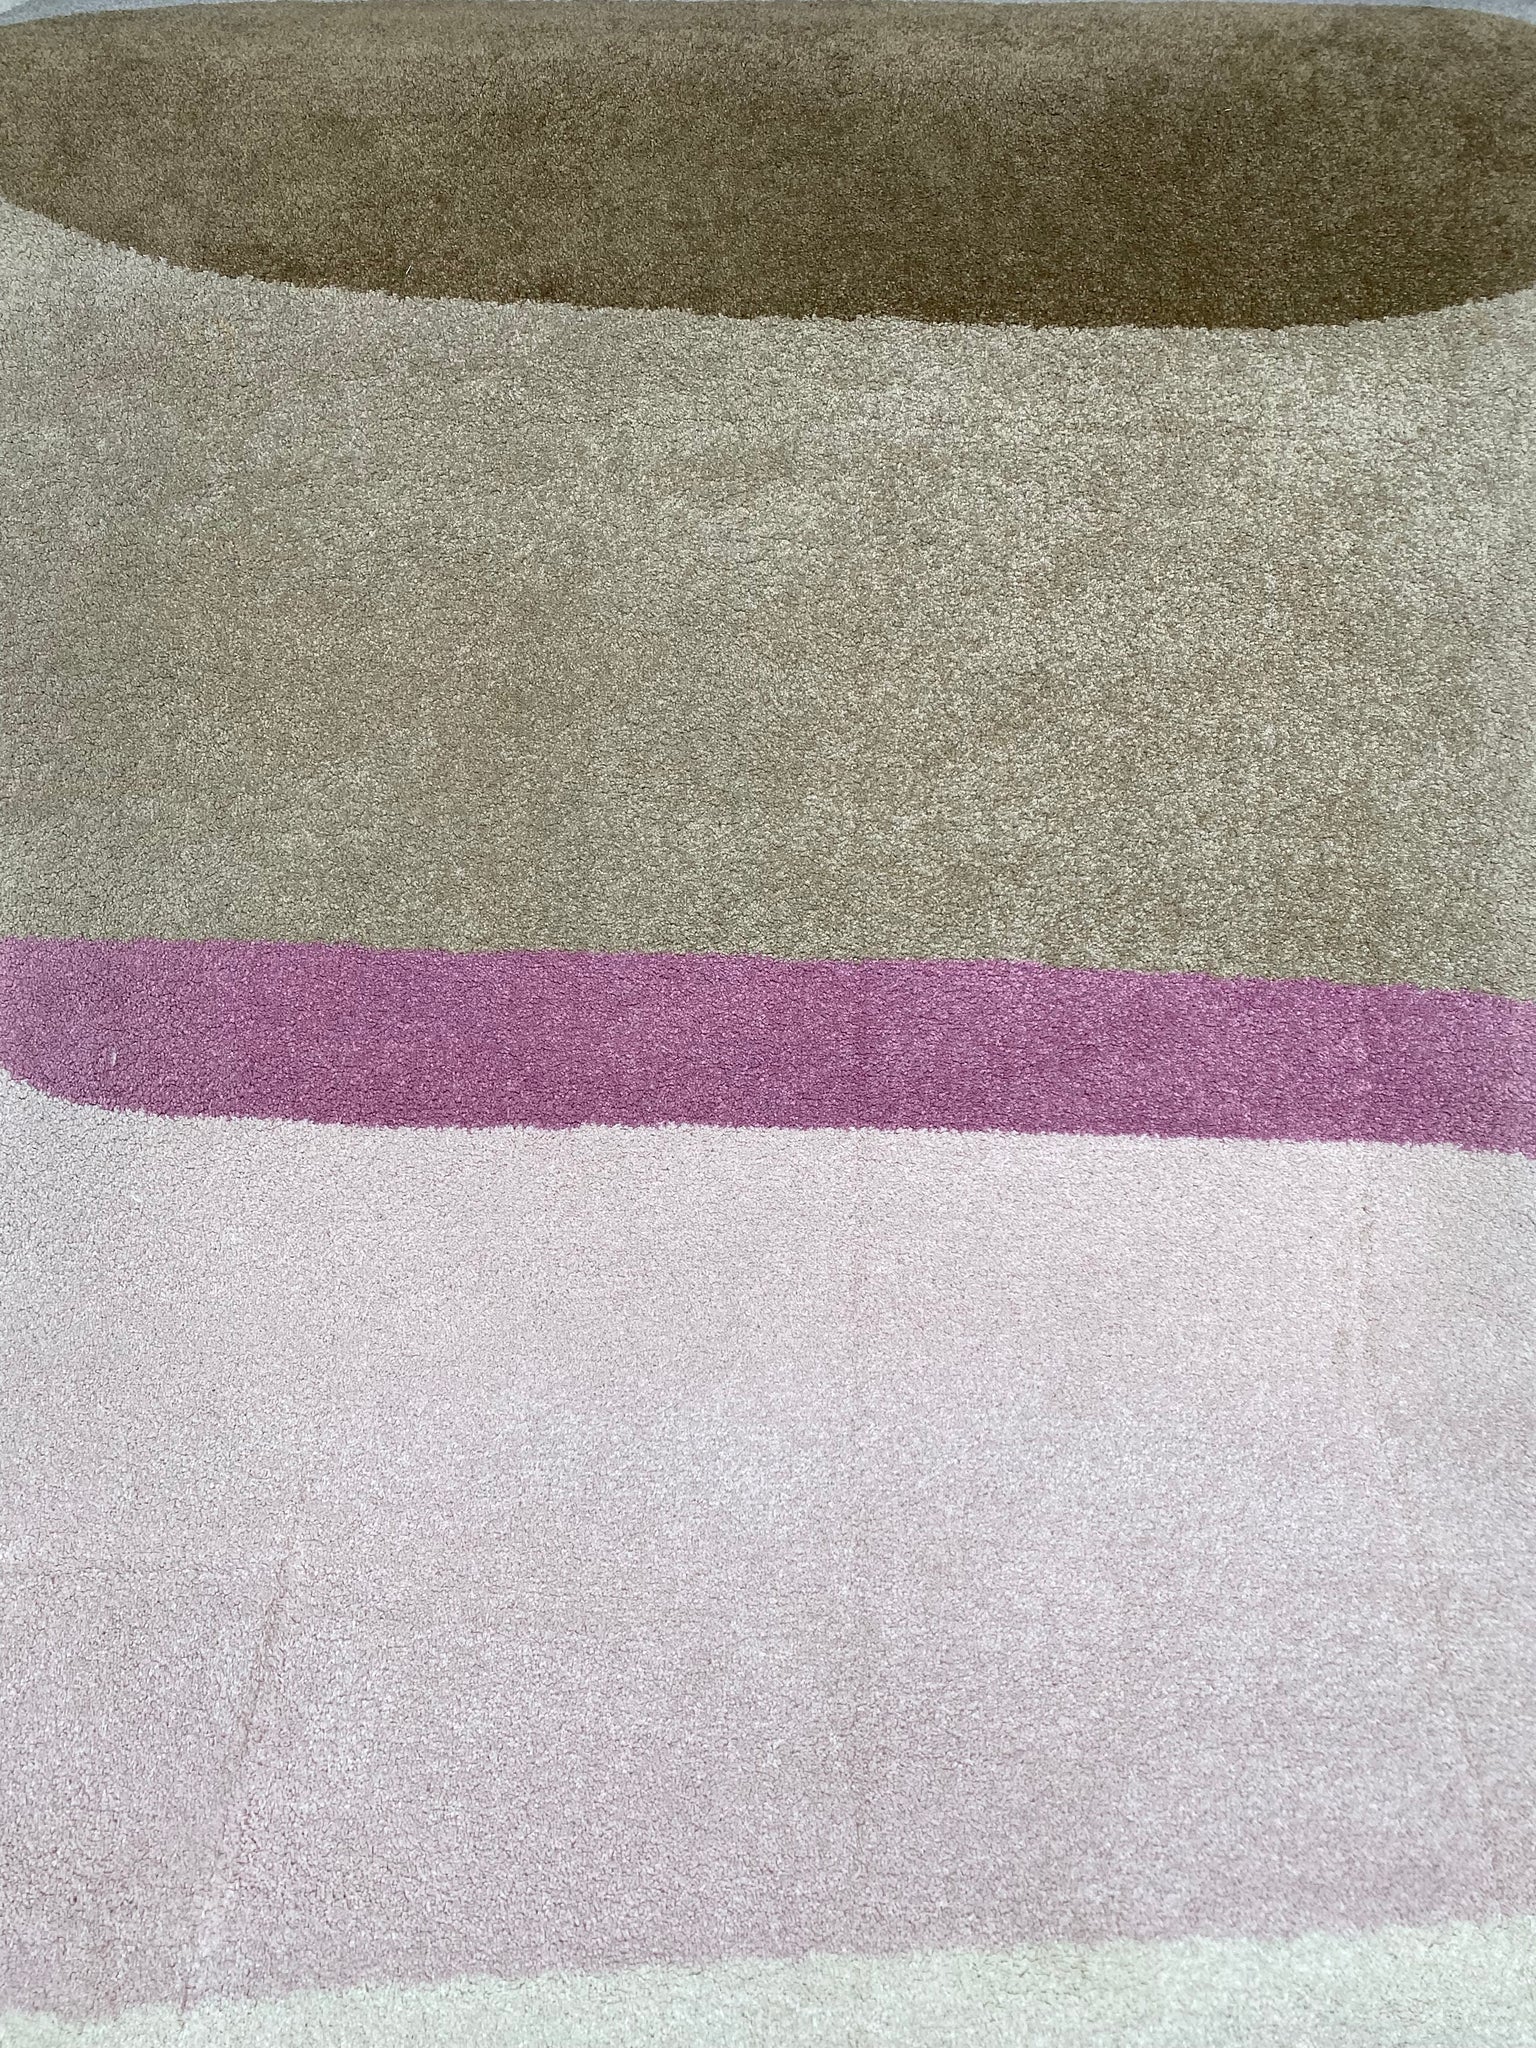 XL colorful rectangles carpet